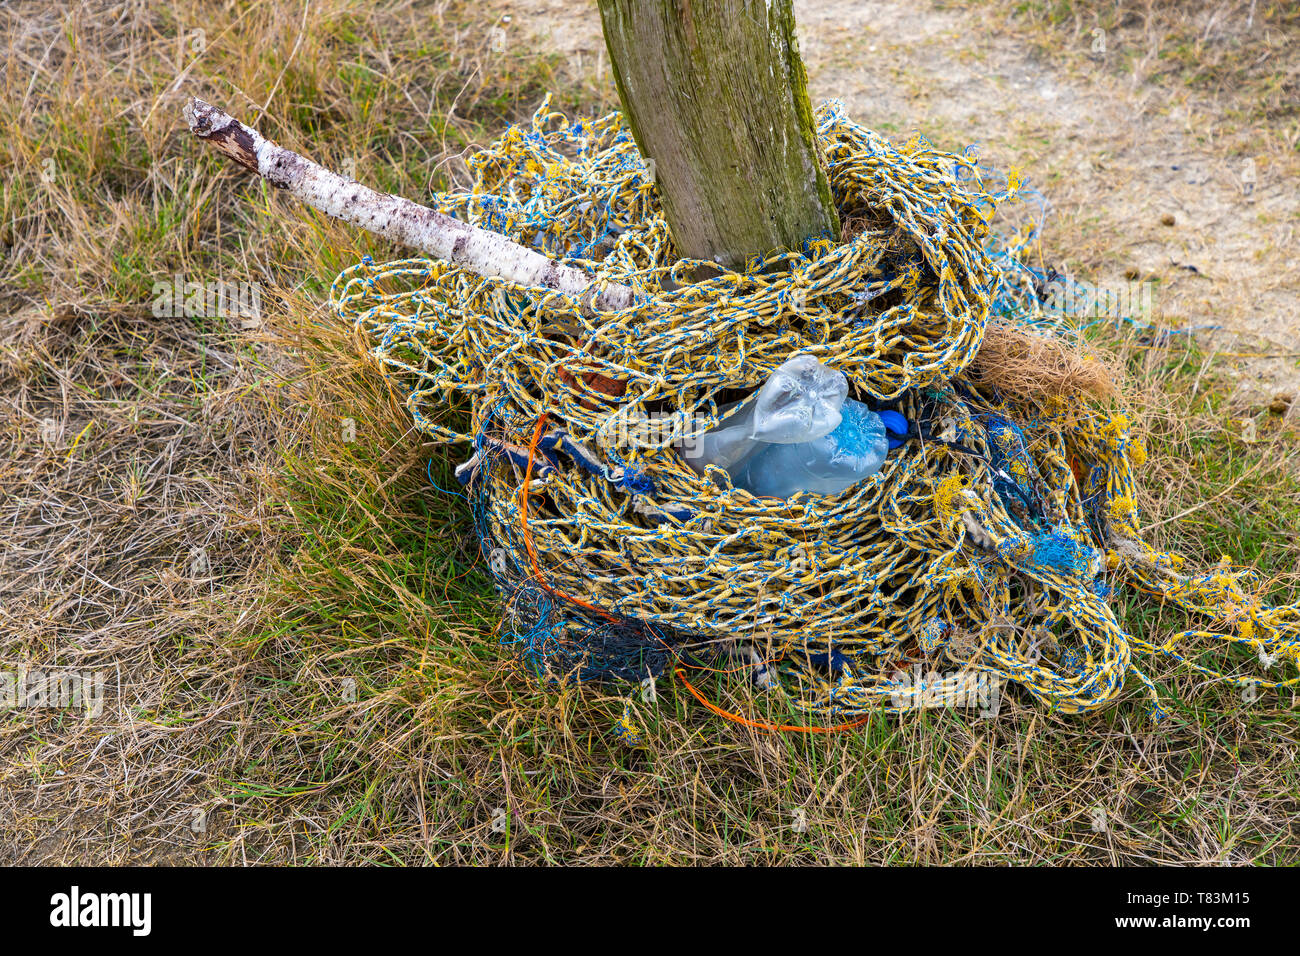 East Frisian North Sea island, Spiekeroog, Wadden Sea National Park, in winter, flotsam, plastic waste, fishing net, Germany, Stock Photo